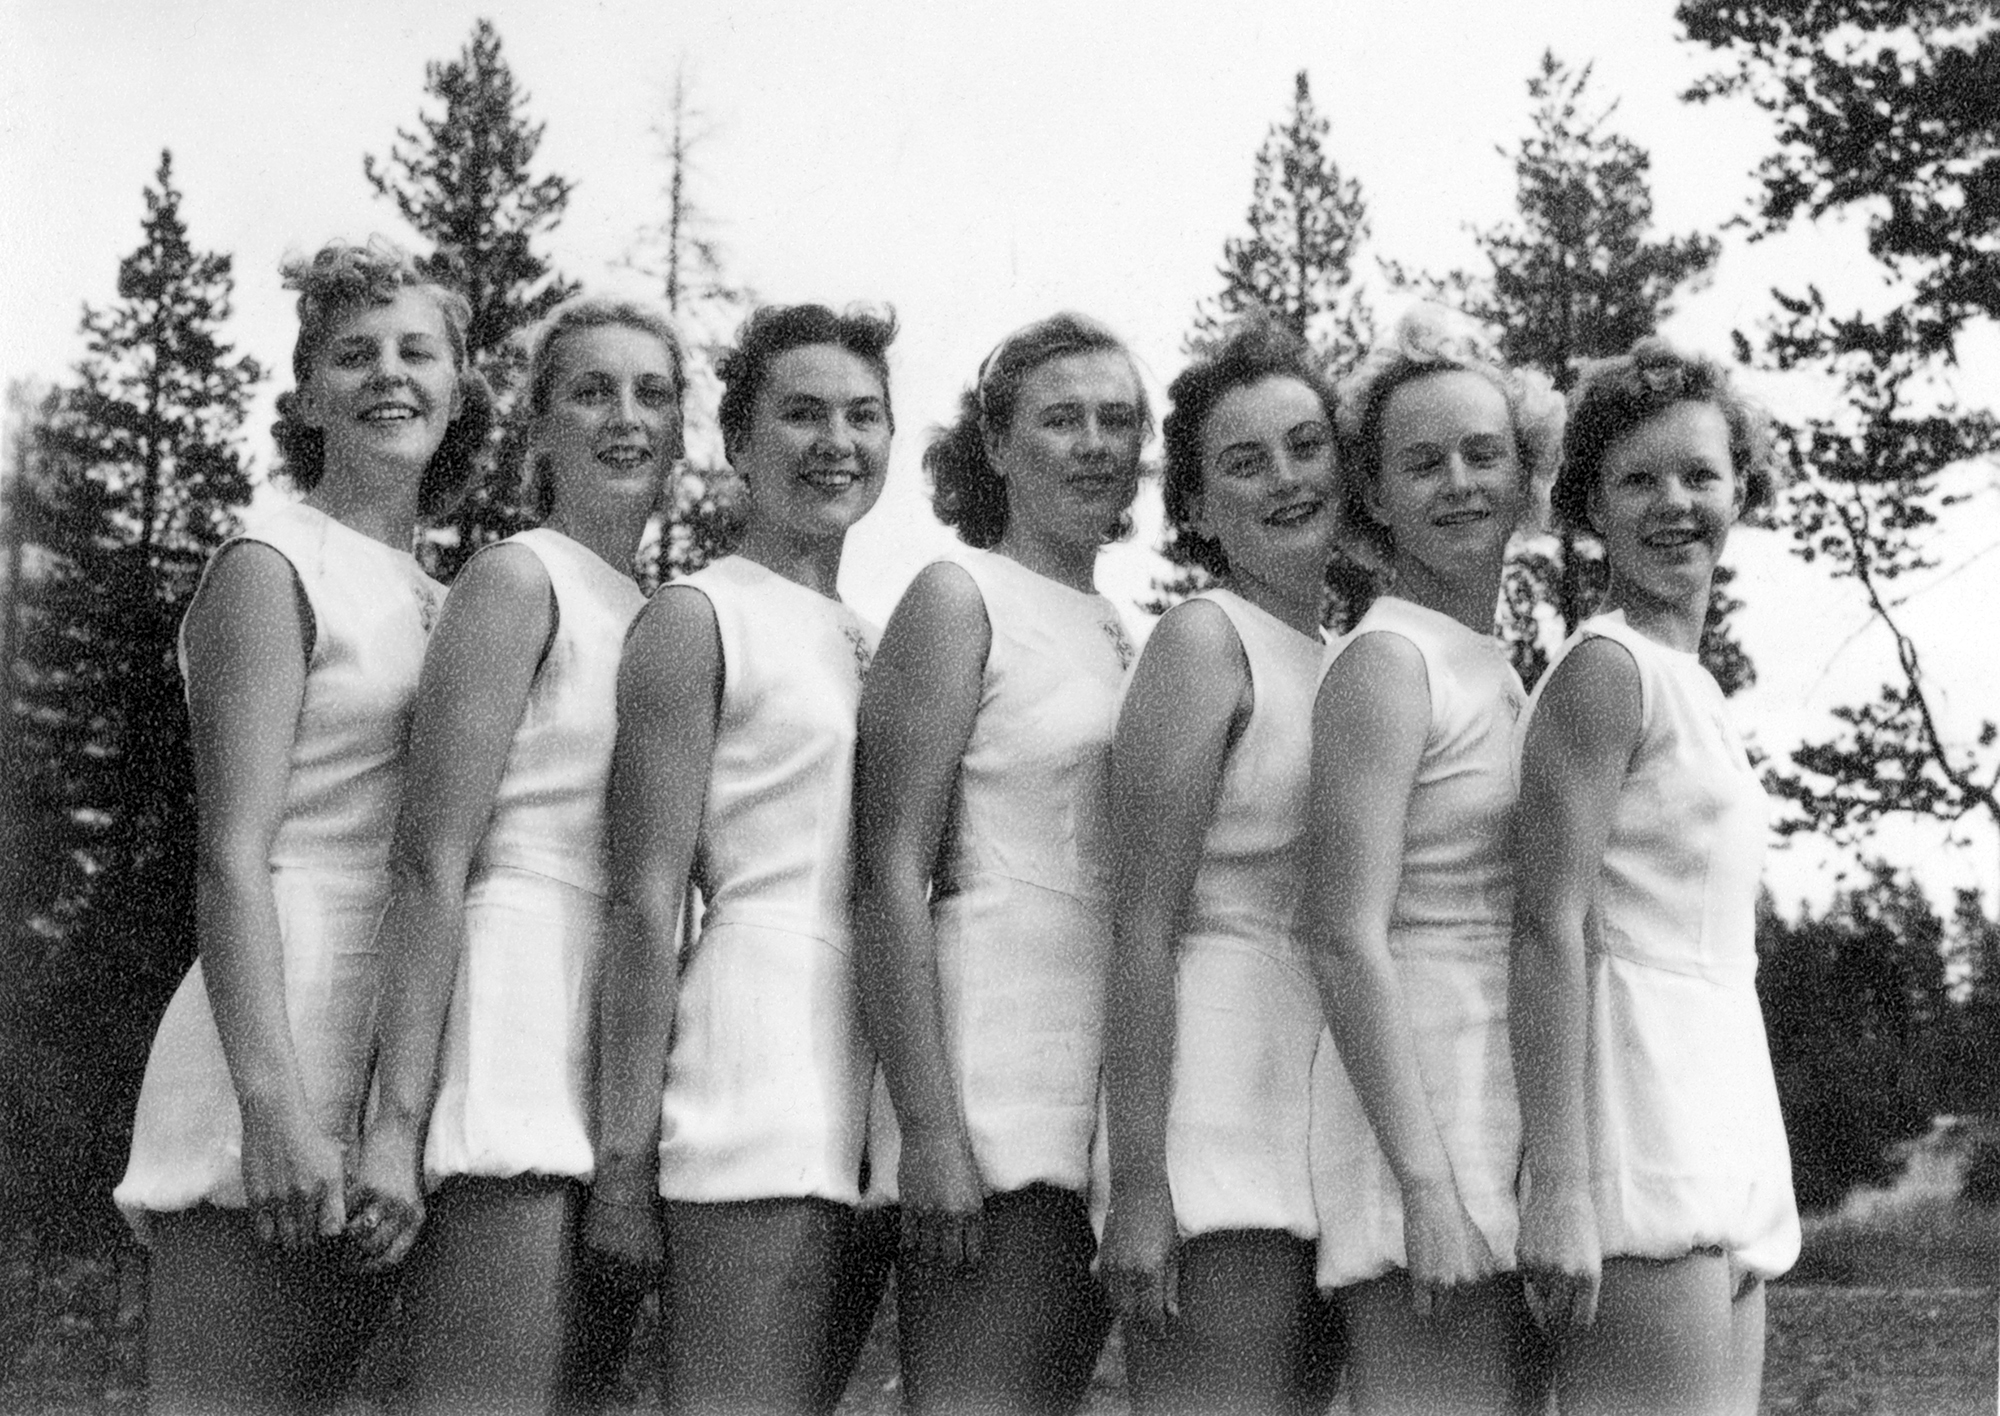 Gruppbild av kvinnliga gymnaster.